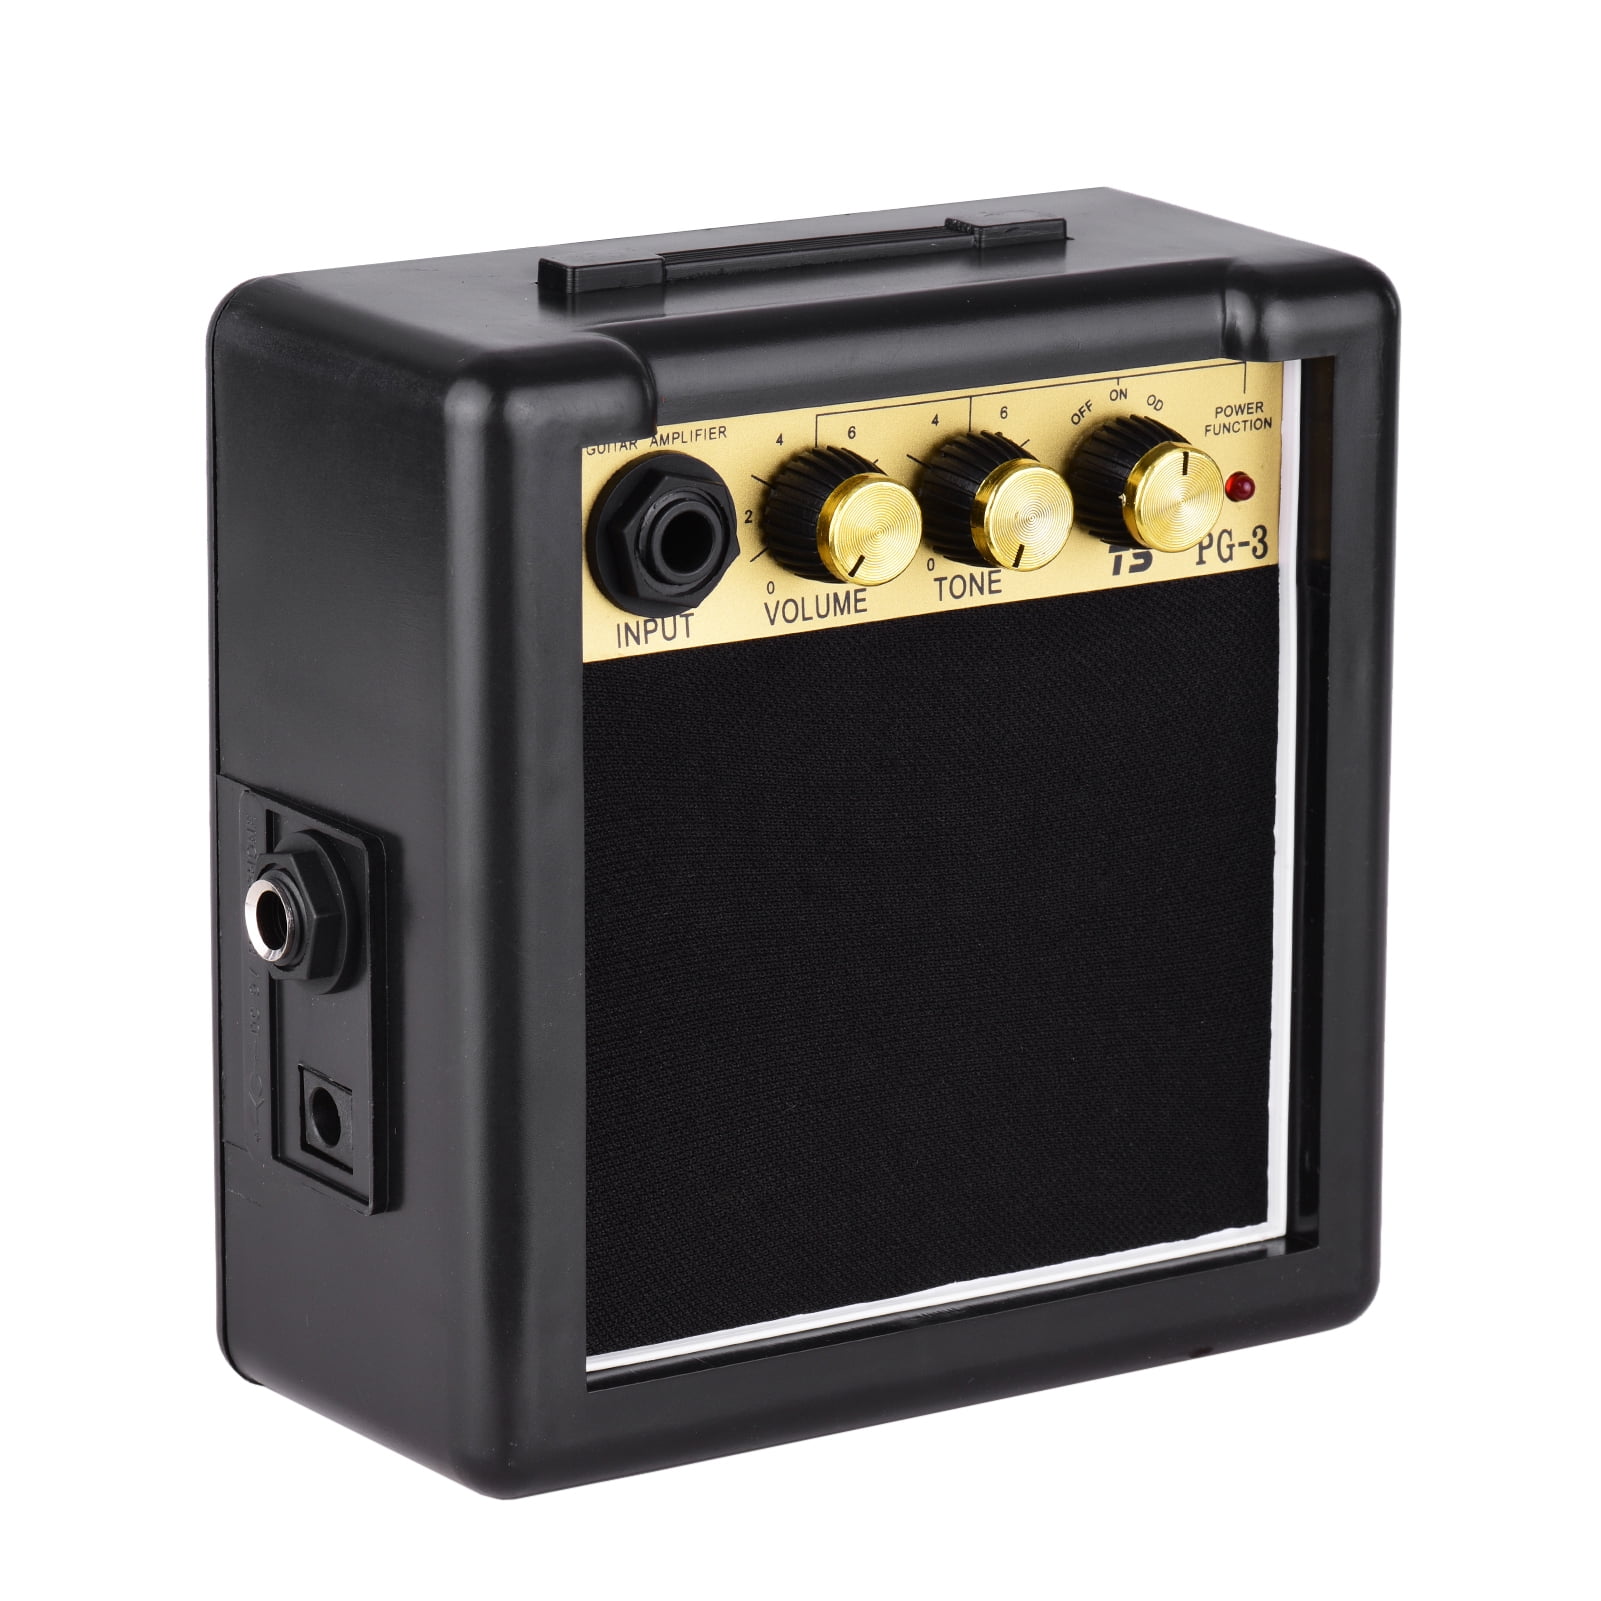 Anself PG-3 3W Electric Guitar Amp Amplifier Speaker Volume Tone Control for Guitar